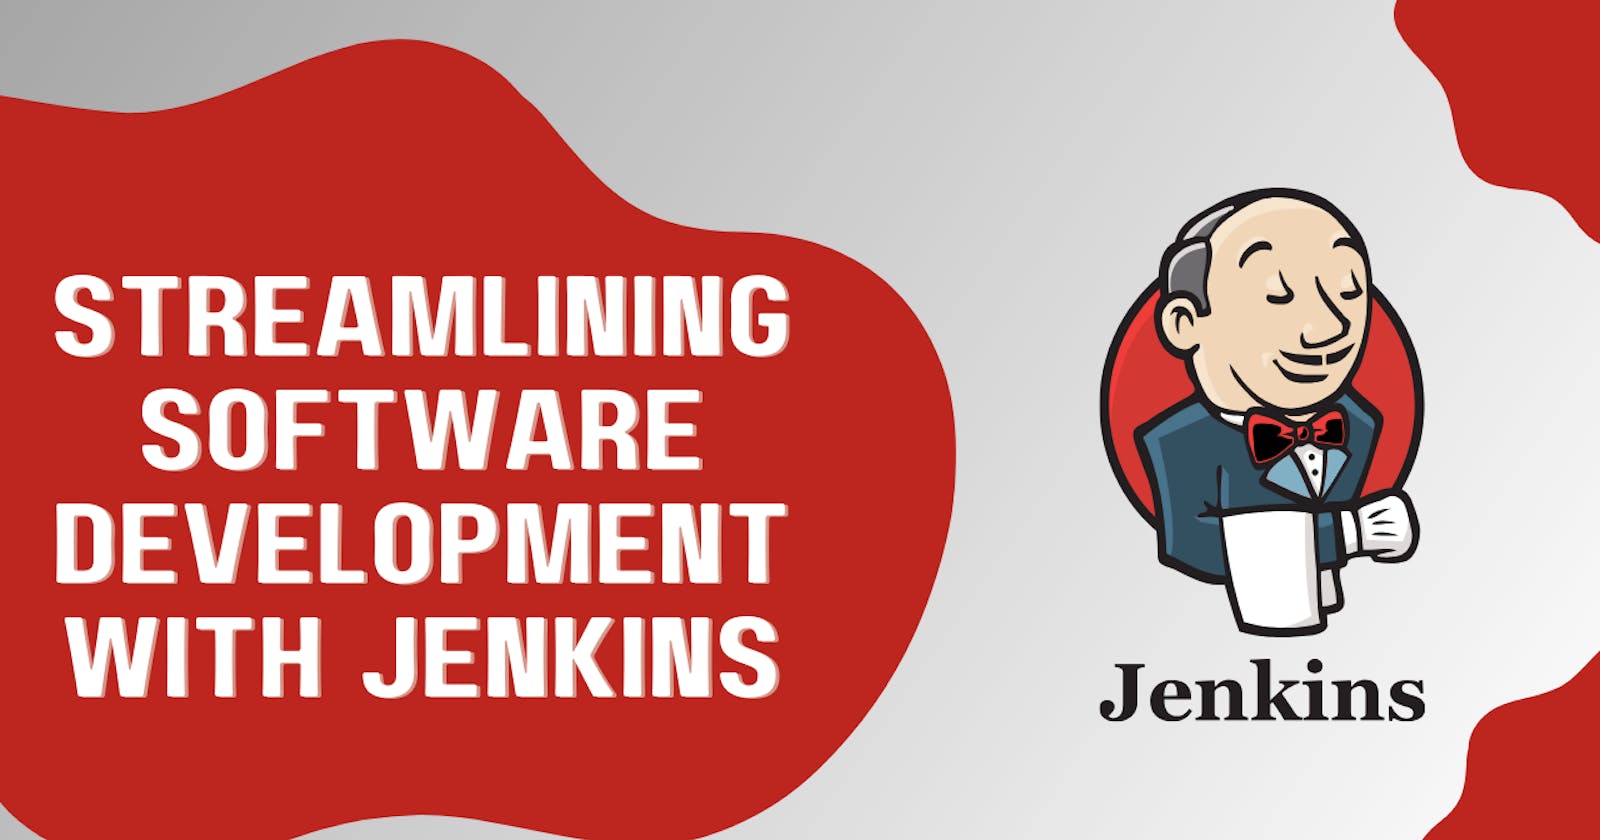 Streamlining Software Development with Jenkins